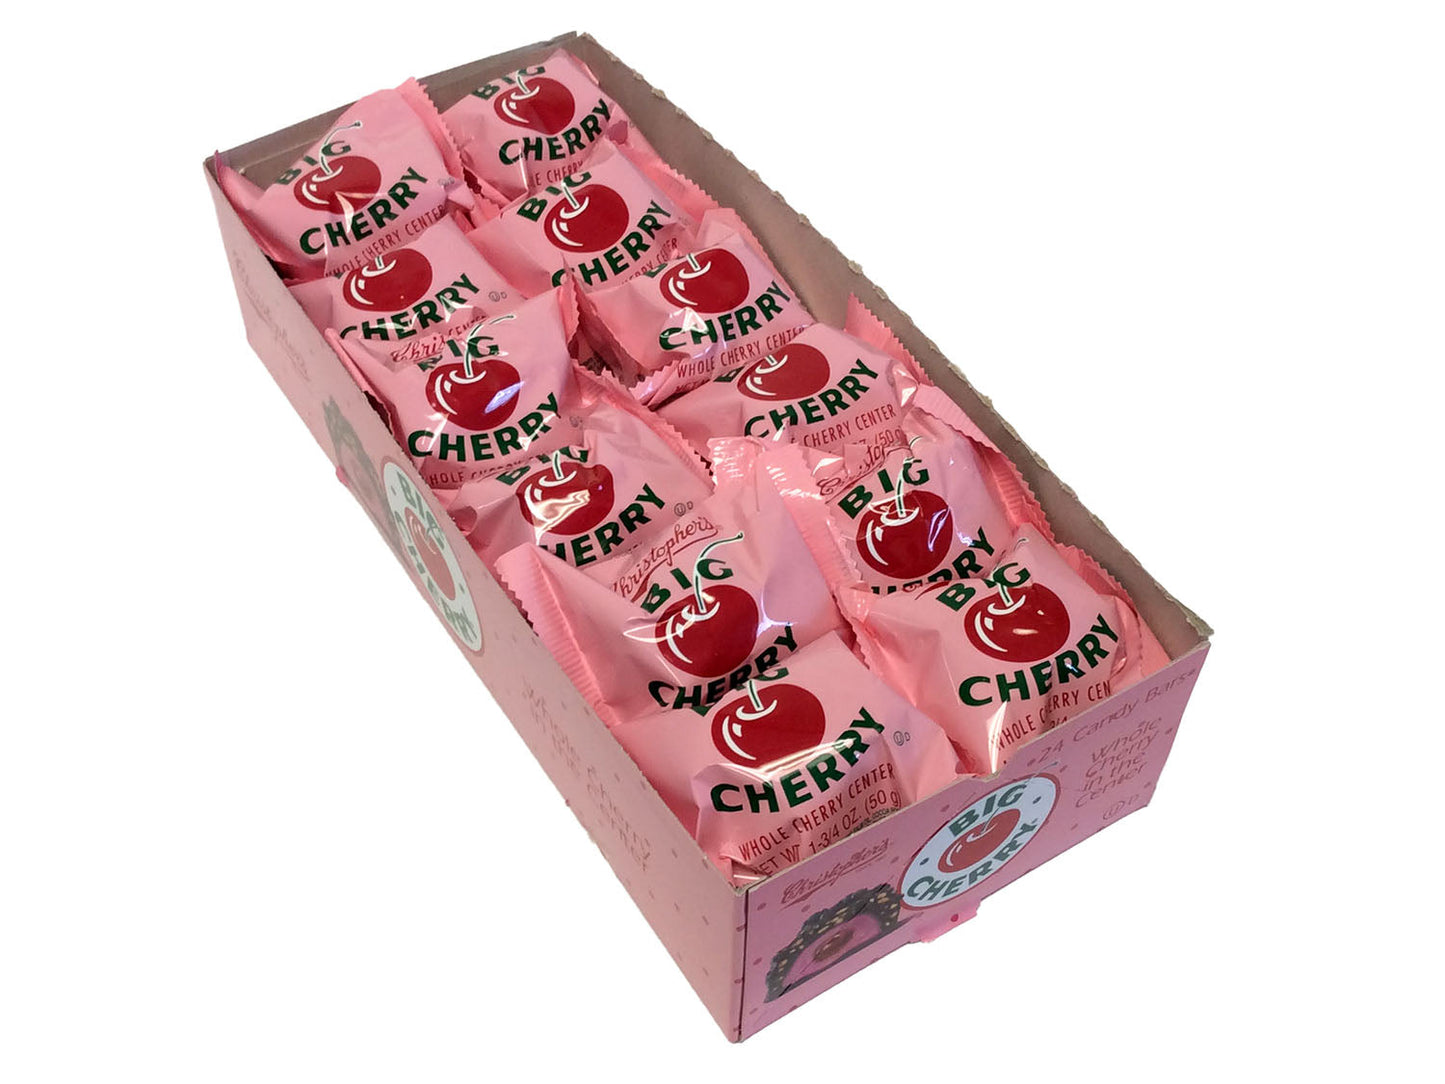 Big Cherry - 1.75 oz bar - box of 24